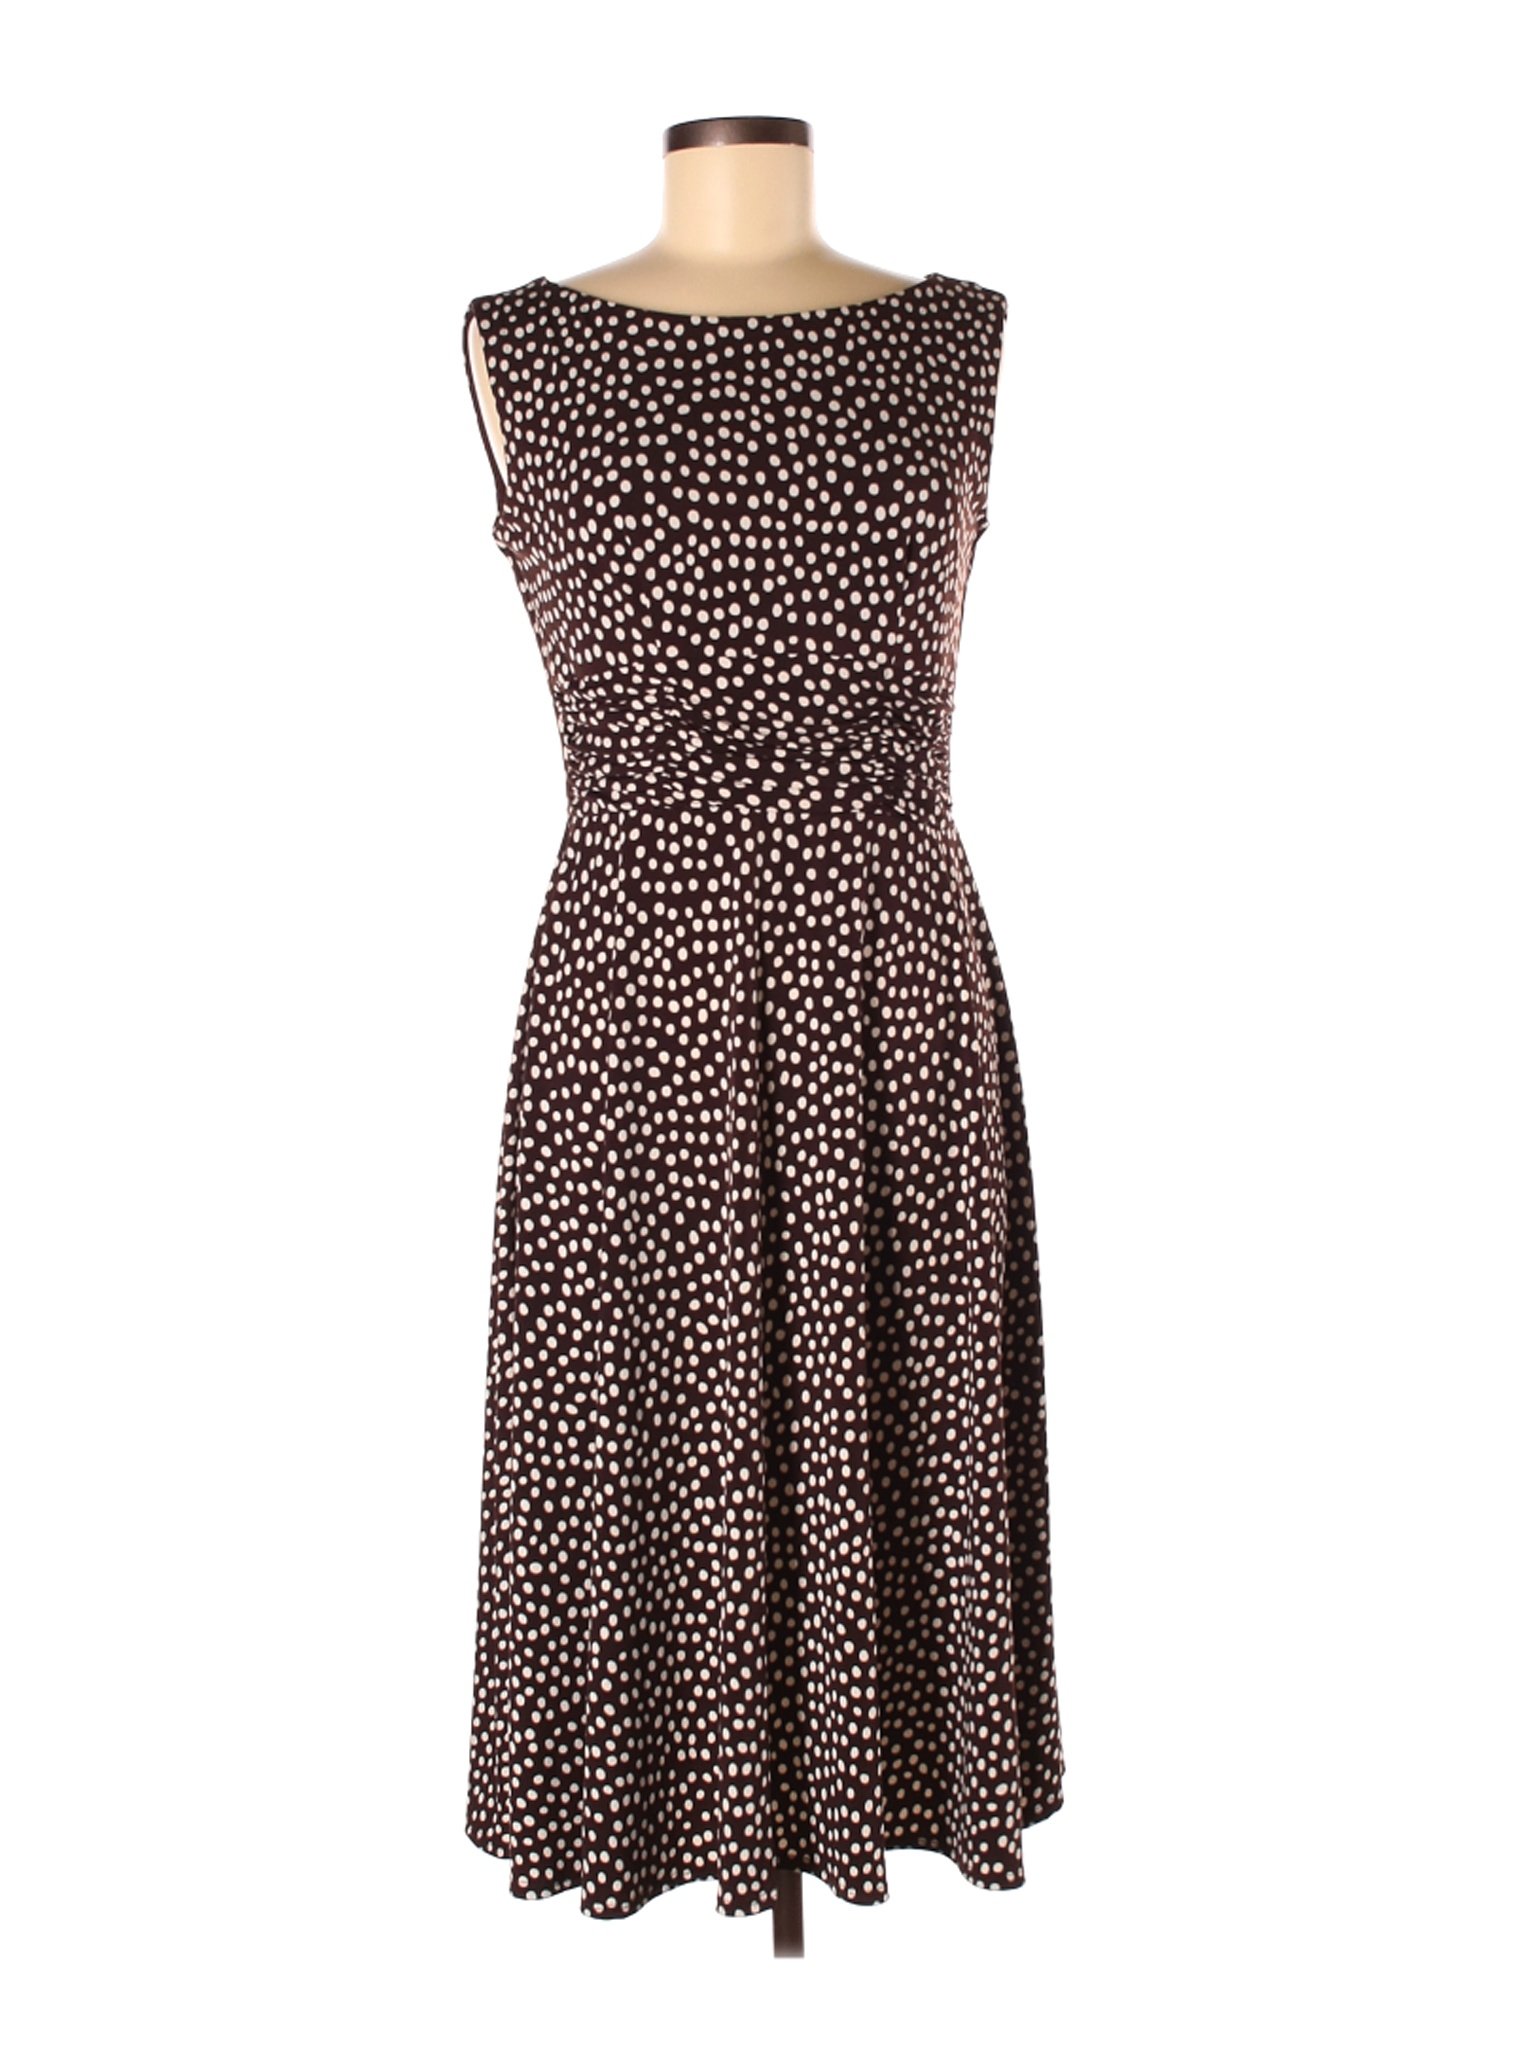 Perceptions Women Brown Casual Dress 8 Petites | eBay